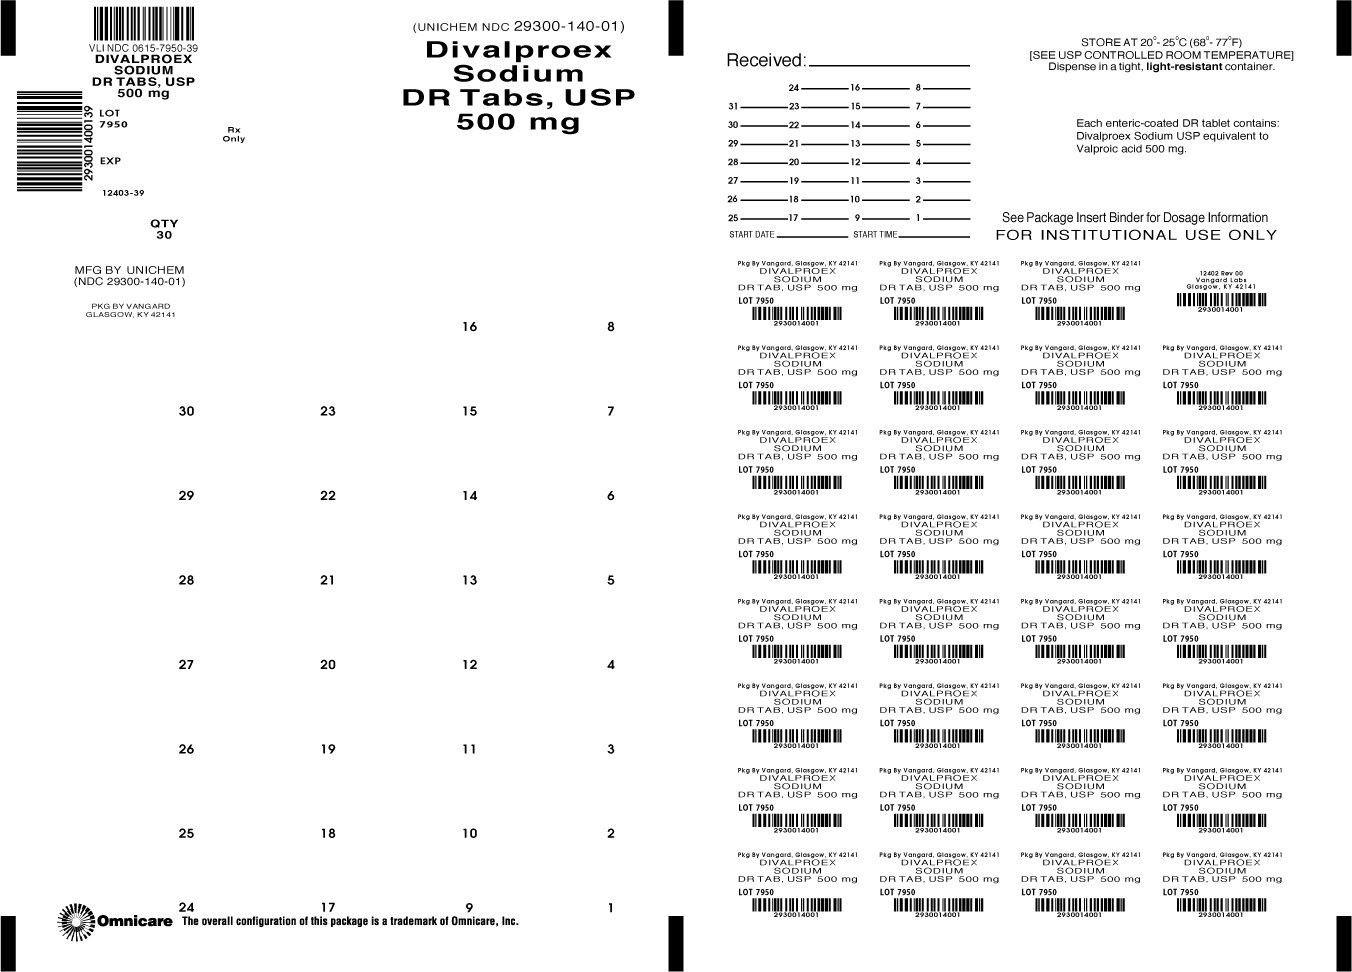 Divalproex Sodium DR Tabs 500mg bingo card label